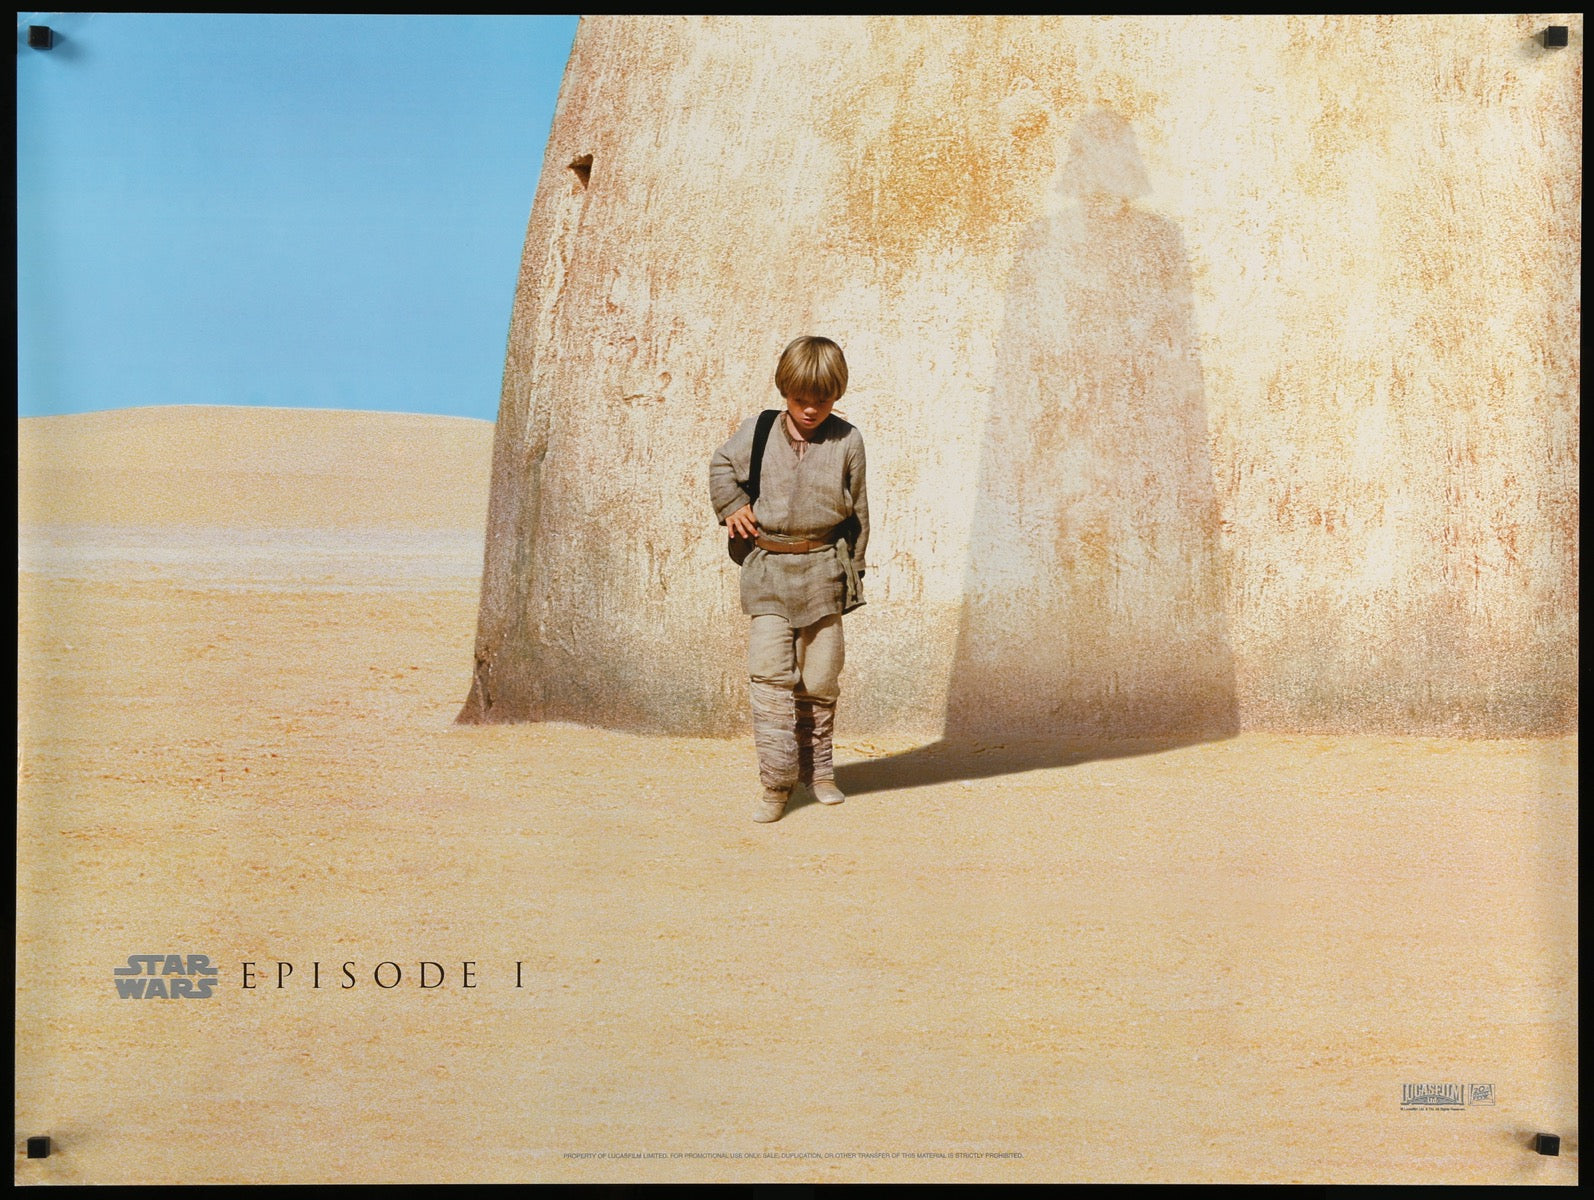 Star Wars: Episode I - The Phantom Menace (1999) original movie poster for sale at Original Film Art